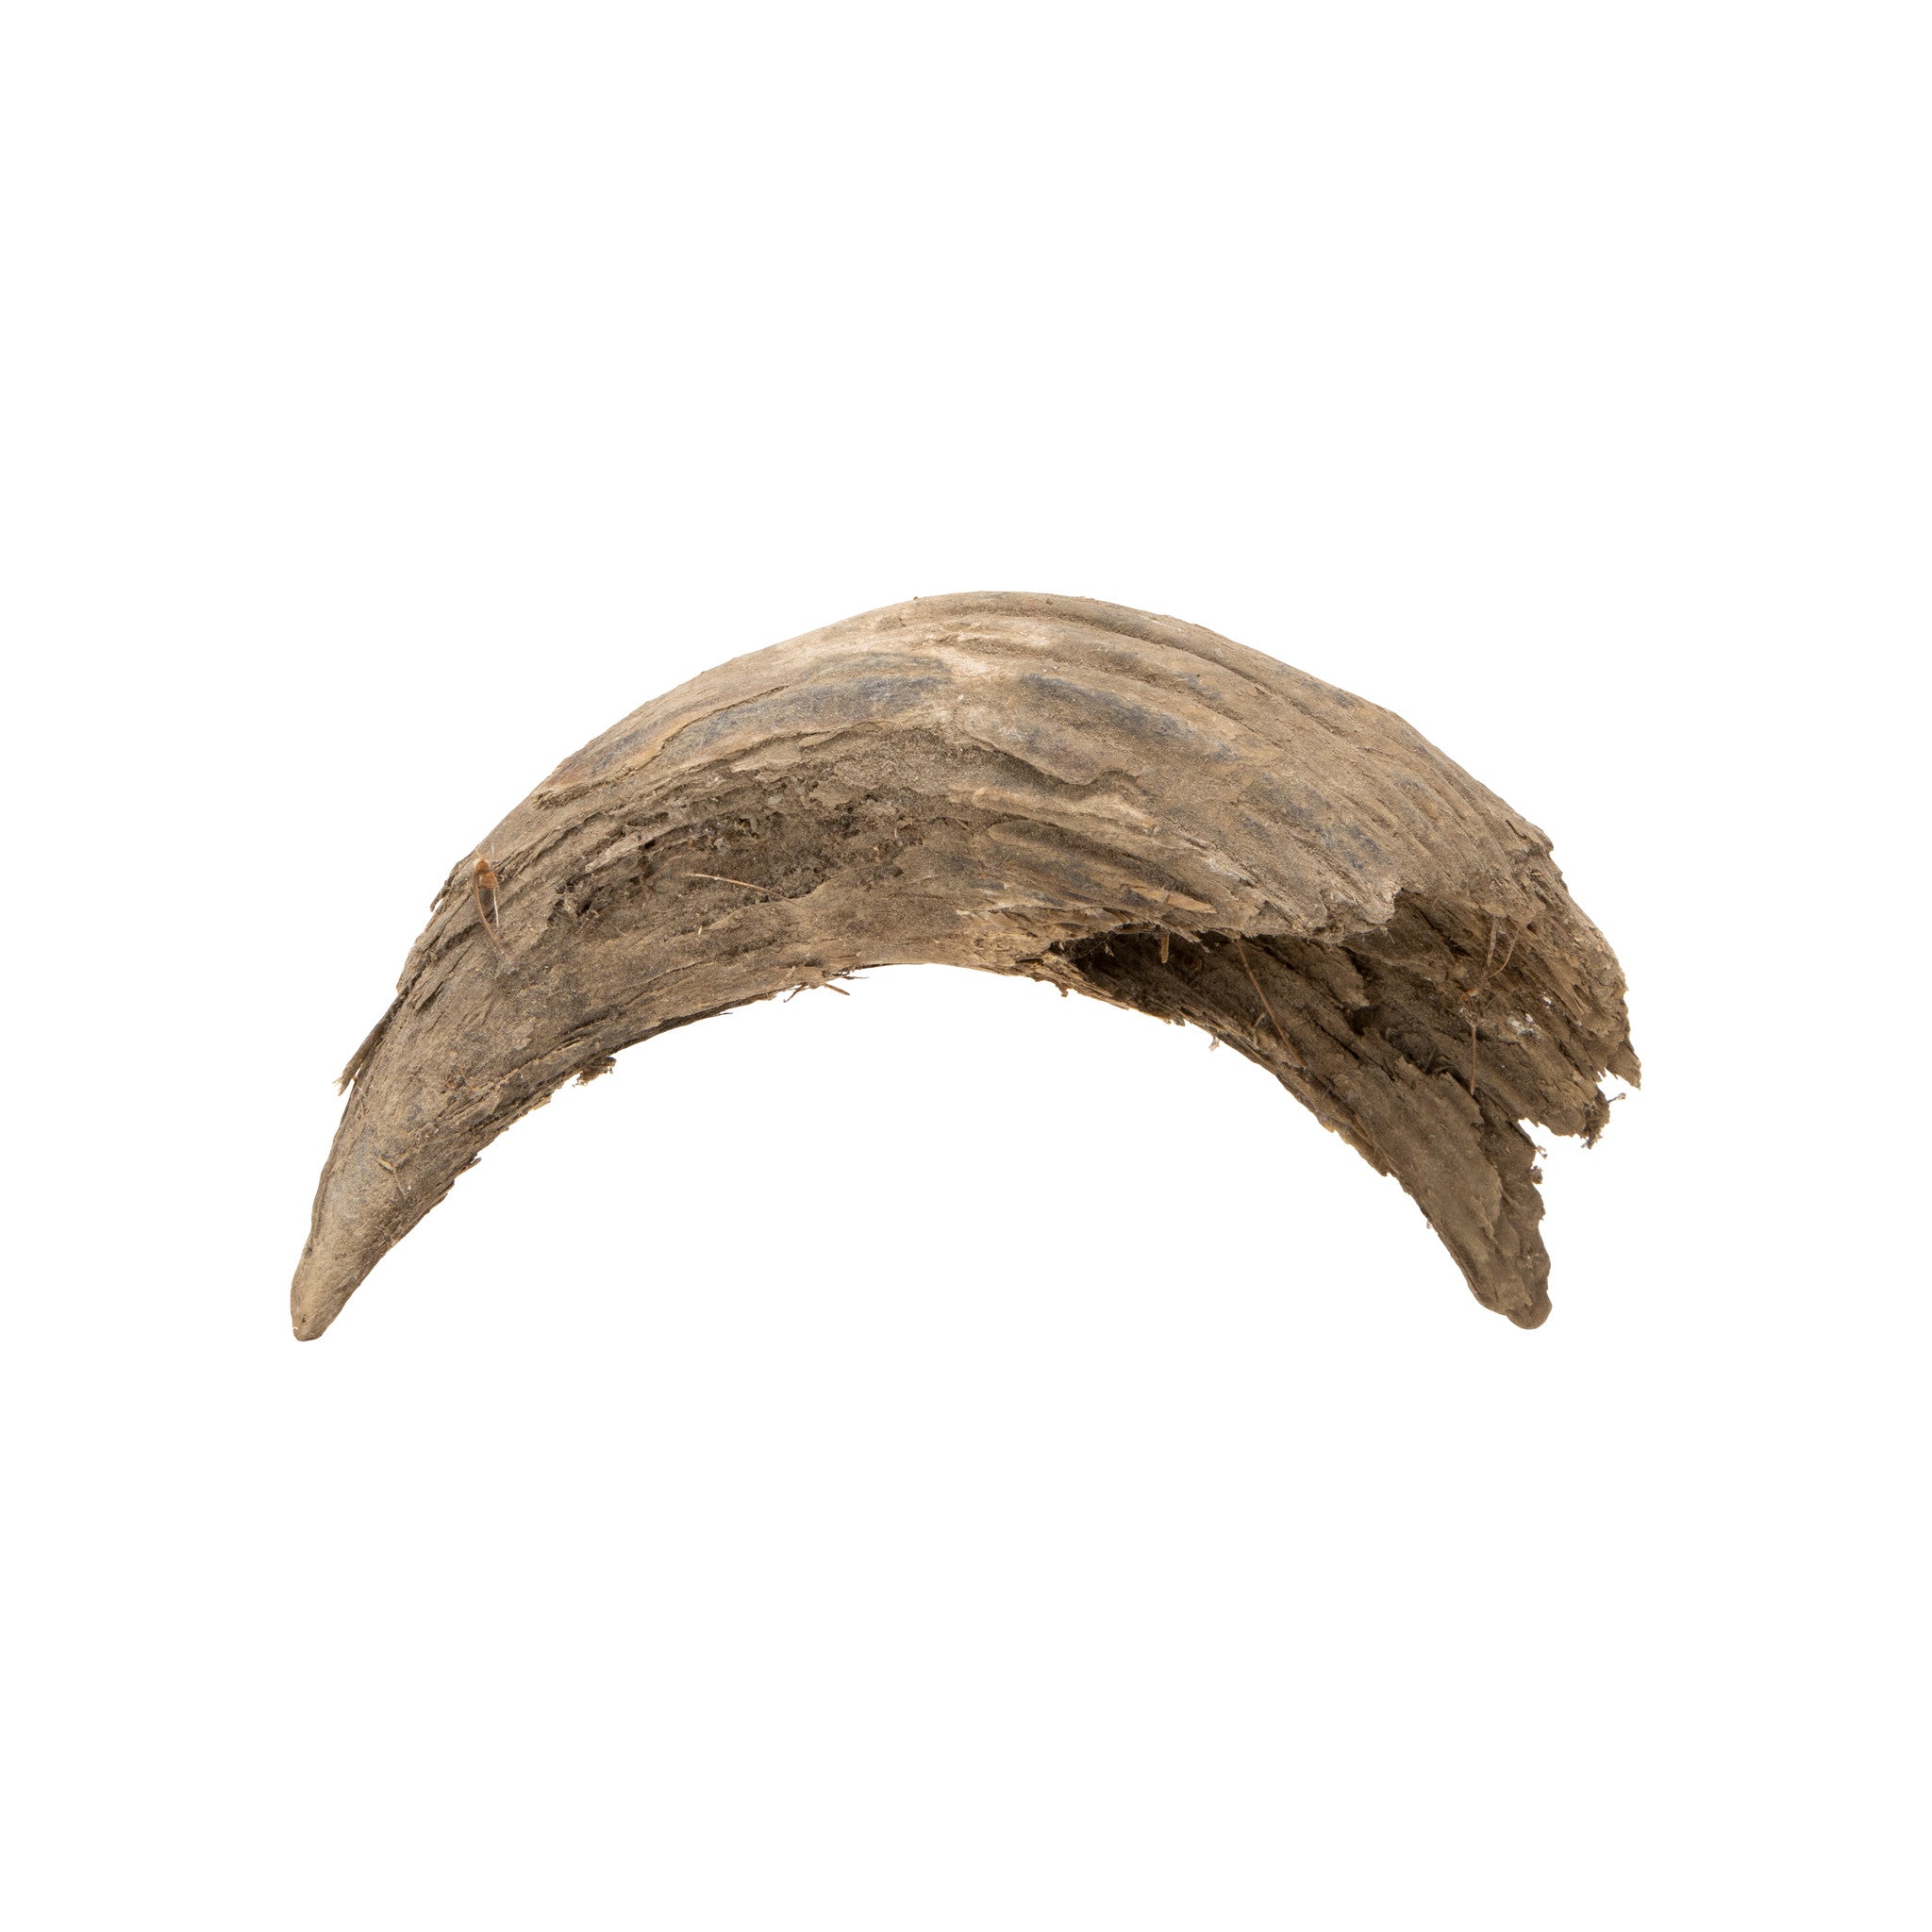 Buffalo Horns